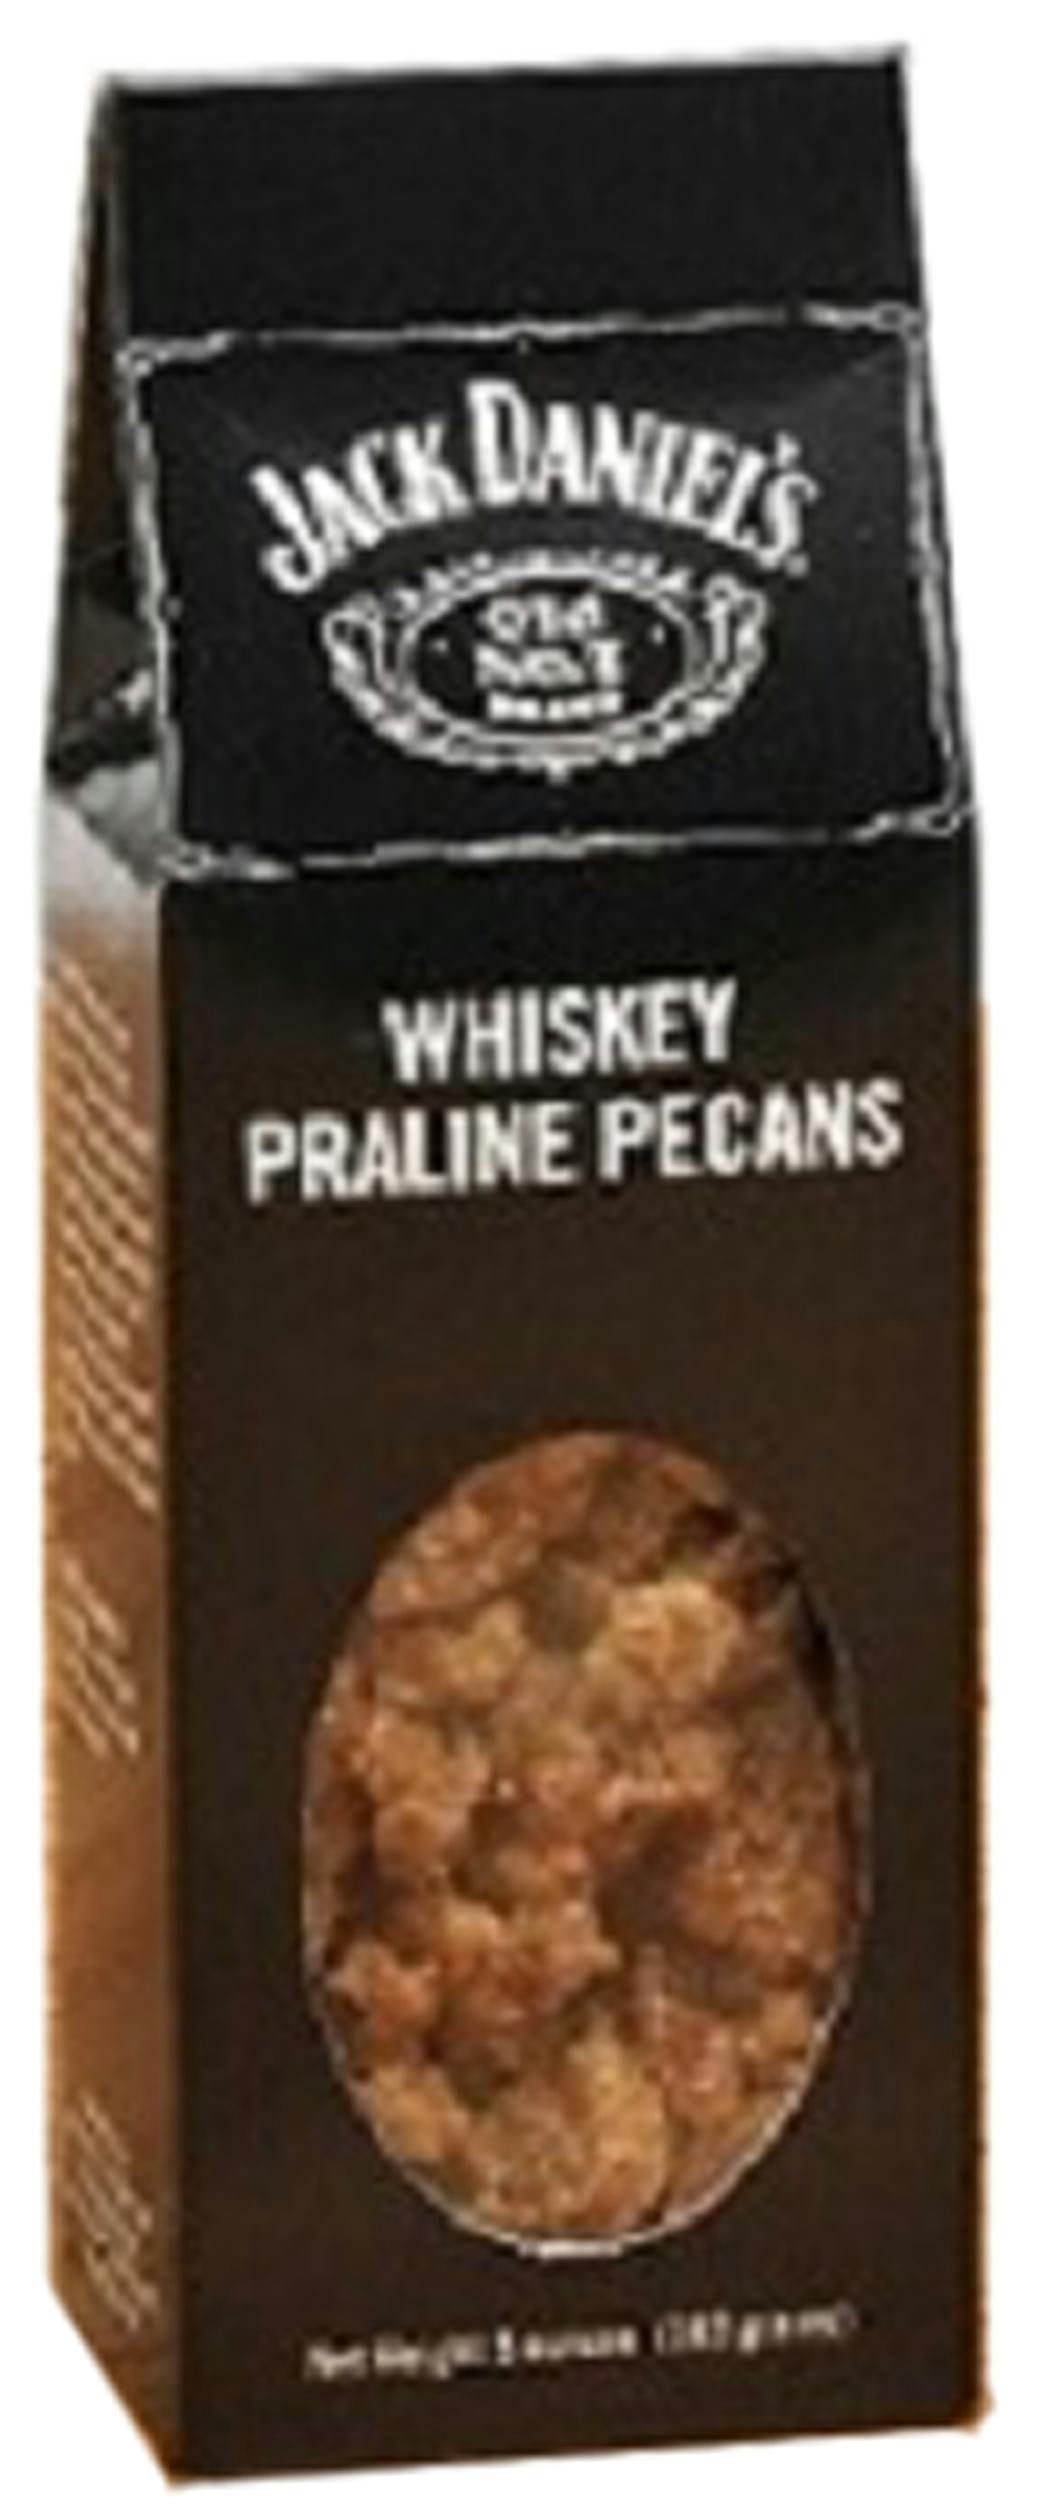 Jack Daniel's Whiskey Praline Pecan Tin-Delicious Distinctive Decadent Present